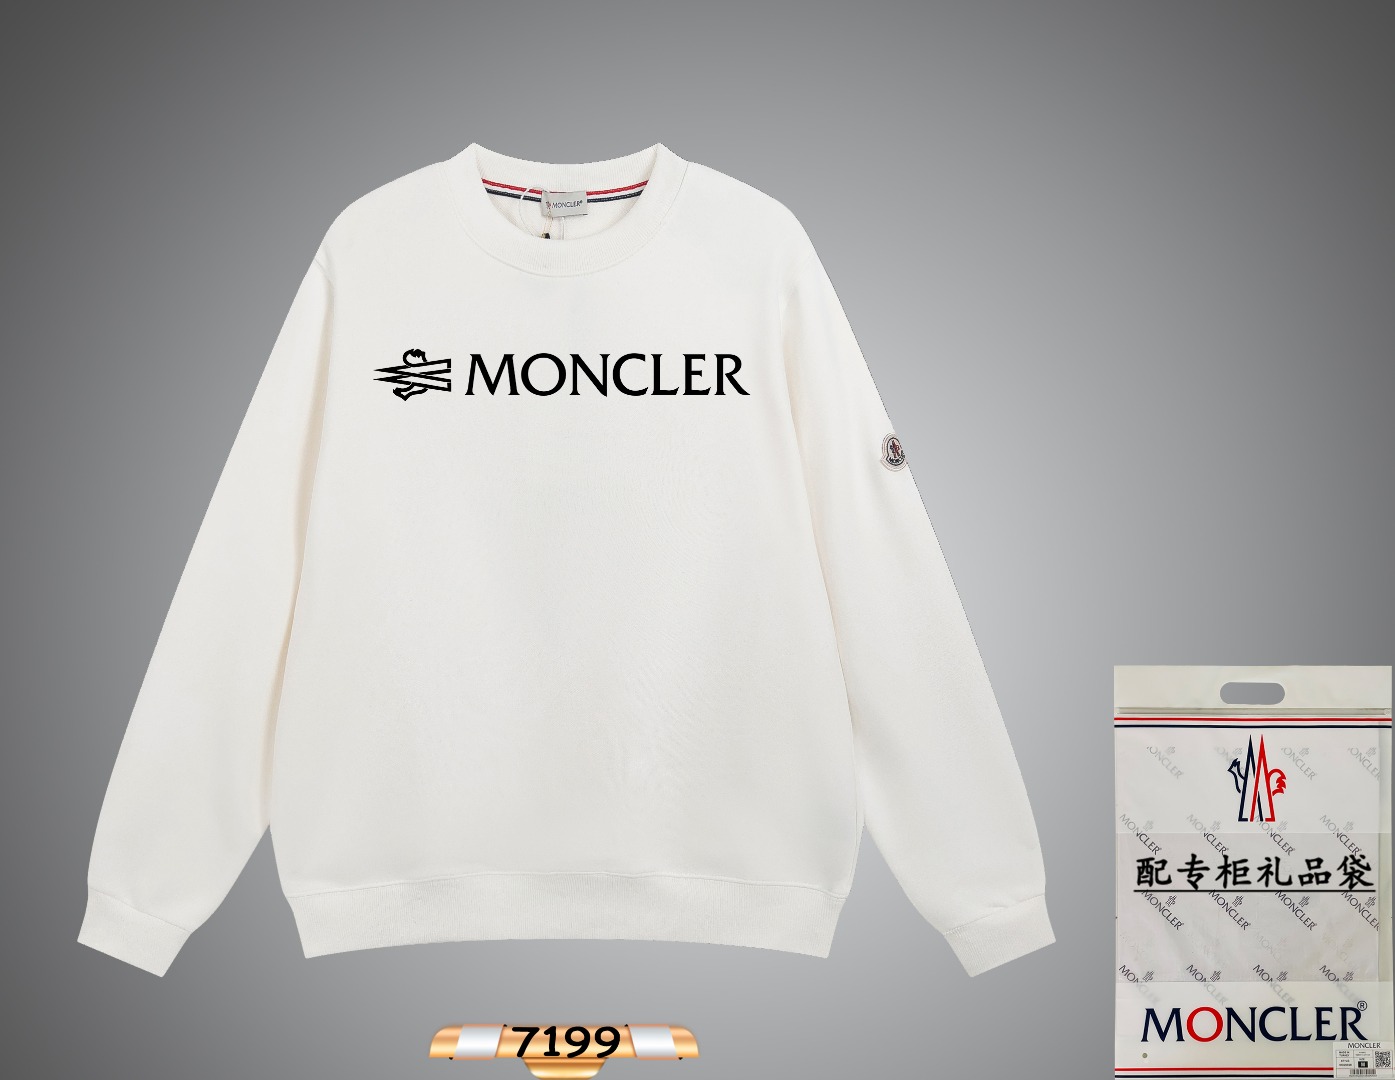 Moncler Clothing Sweatshirts Black White Printing Unisex Fall/Winter Collection Fashion